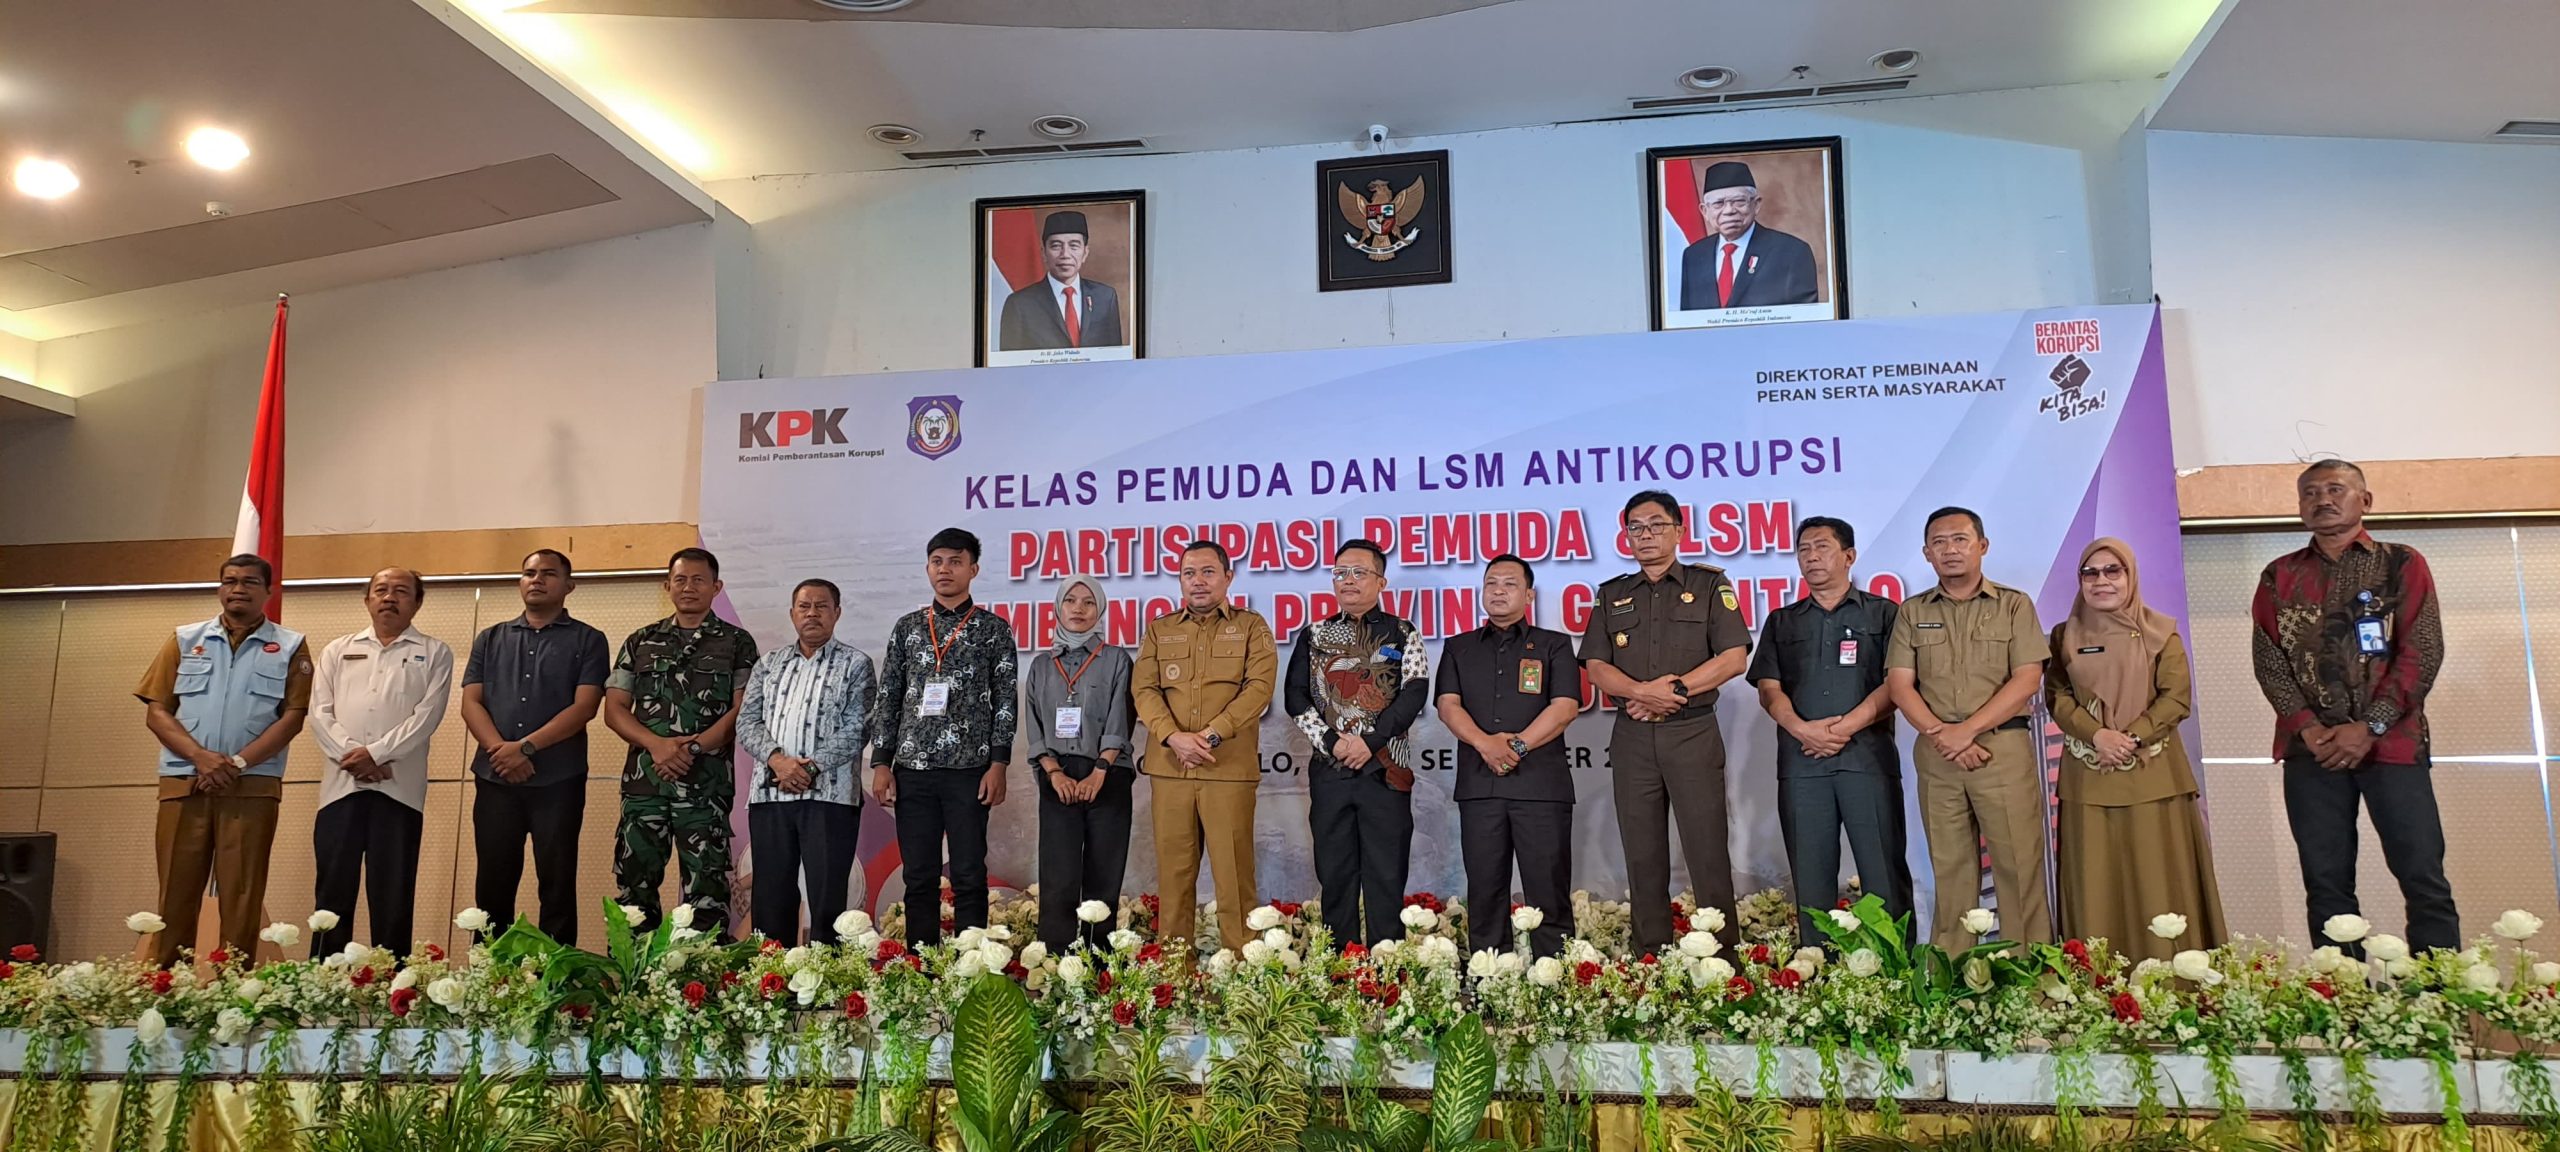 DPRD Gorontalo Tidak Melakukan Korupsi